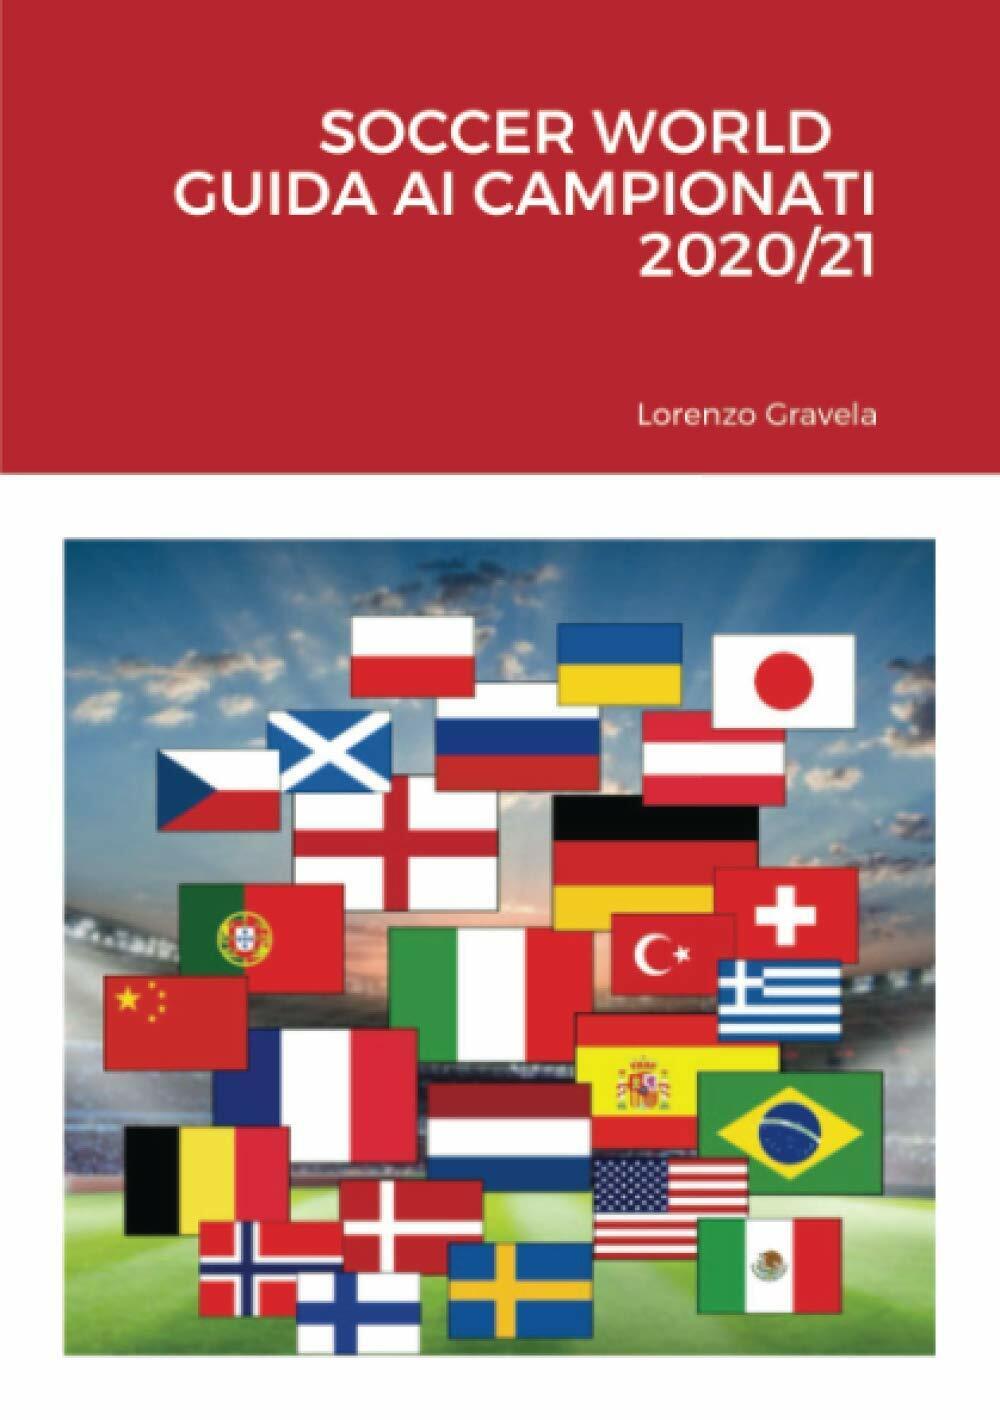 SOCCER WORLD - GUIDA AI CAMPIONATI 2020/21 - Lorenzo Gravela - Lulu.com, 2020 libro usato